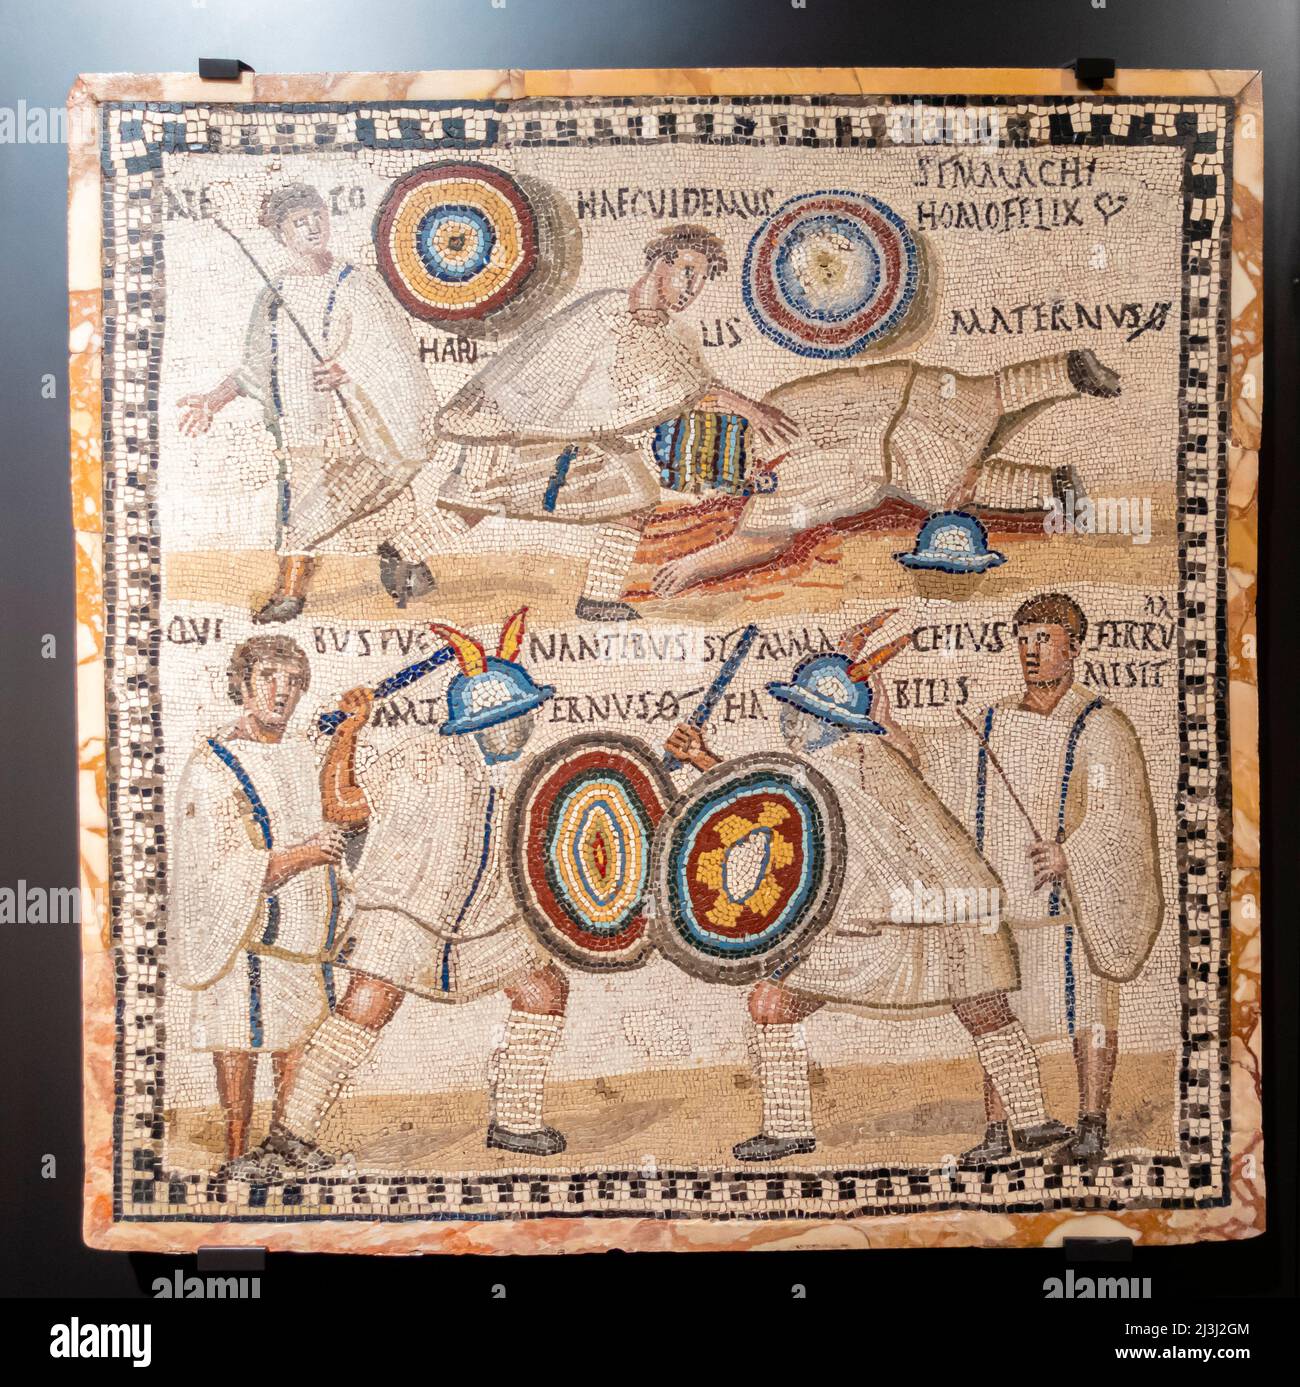 Gladiators Fighting Animals in the circus at Pompeii Baby Onesie